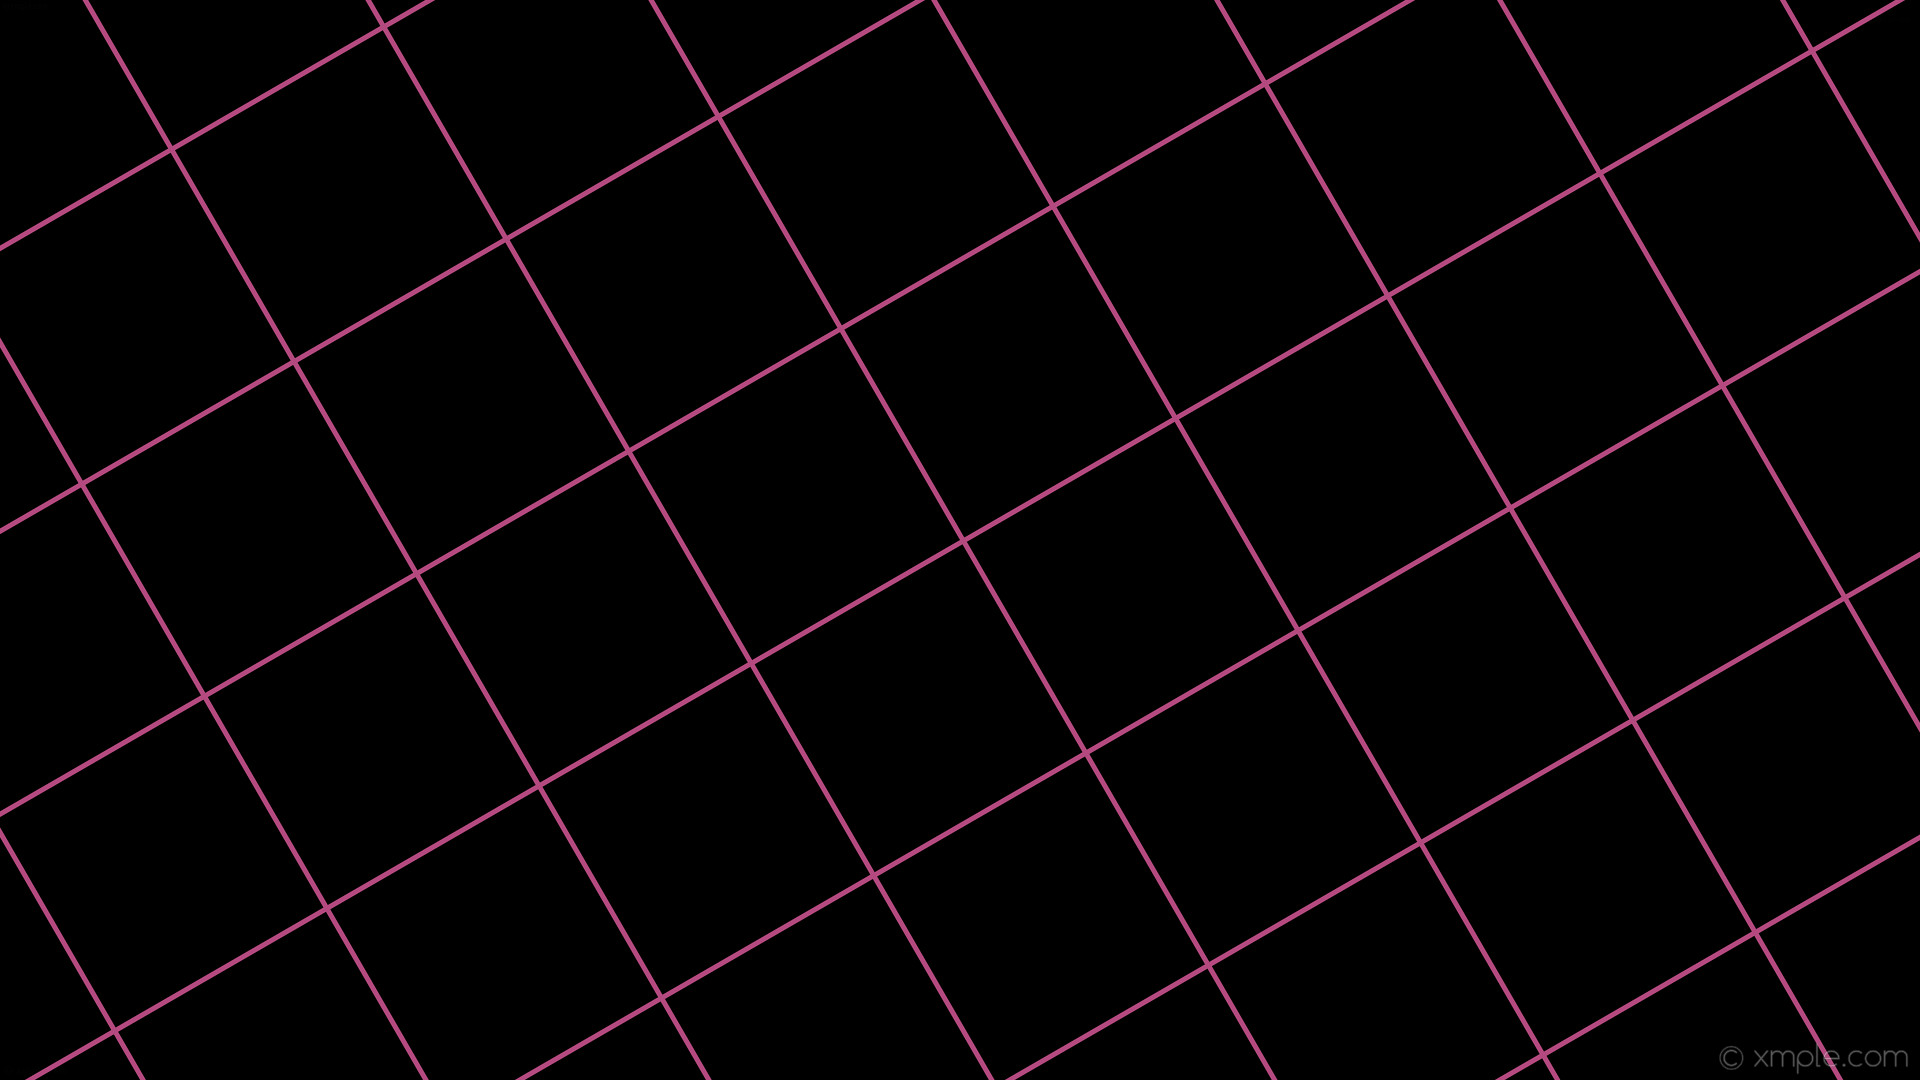 1920x1080 wallpaper graph paper black pink grid hot pink #000000 #ff69b4 30Â° 5px 245px